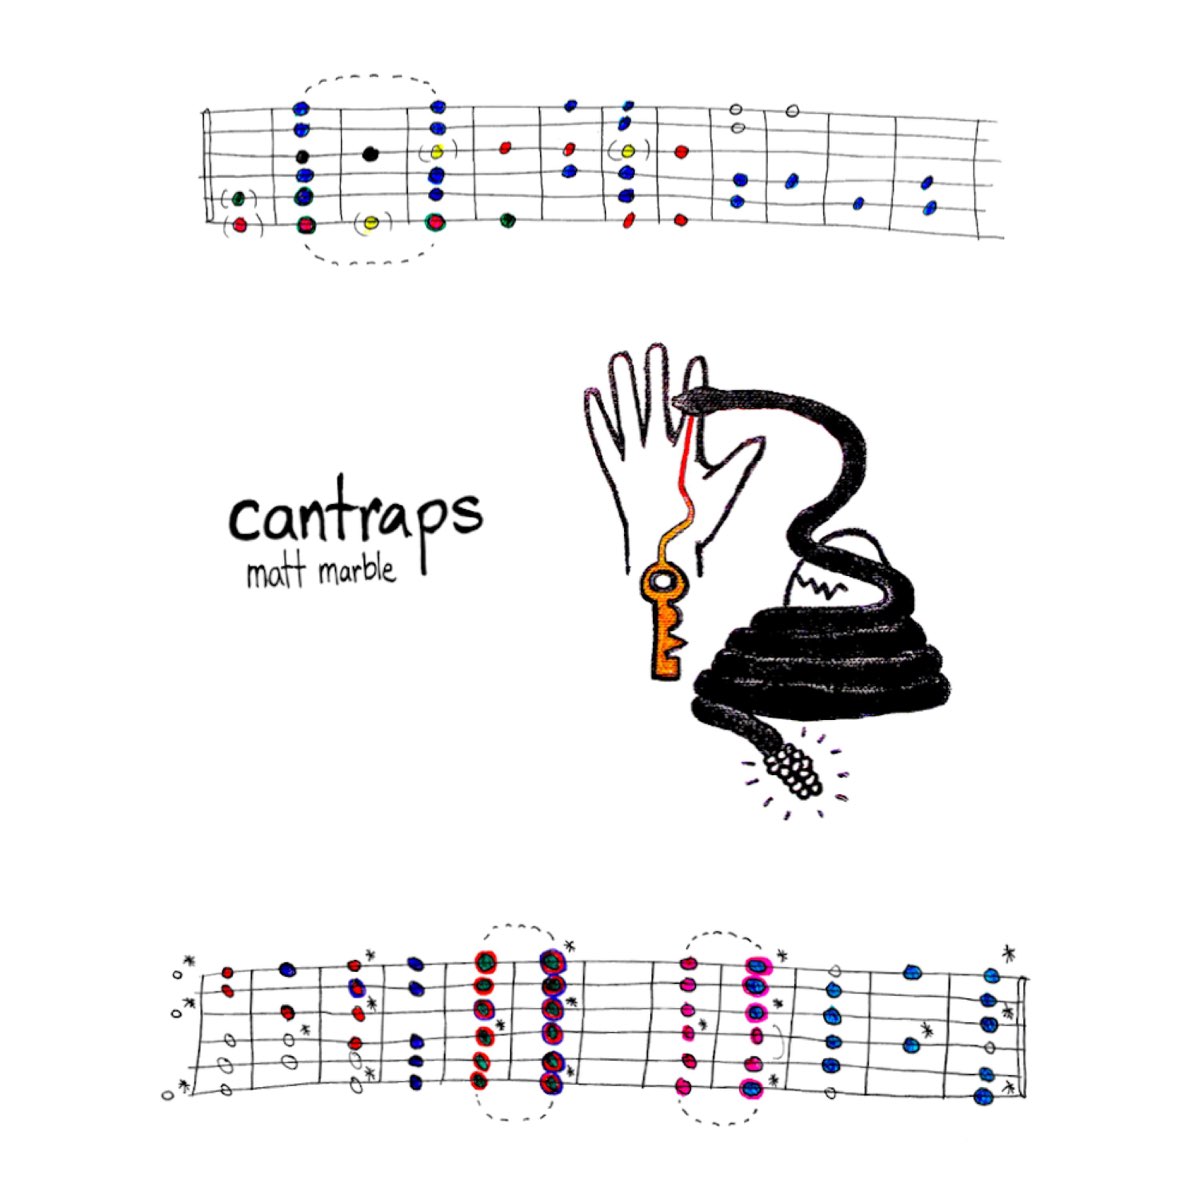 Cantraps